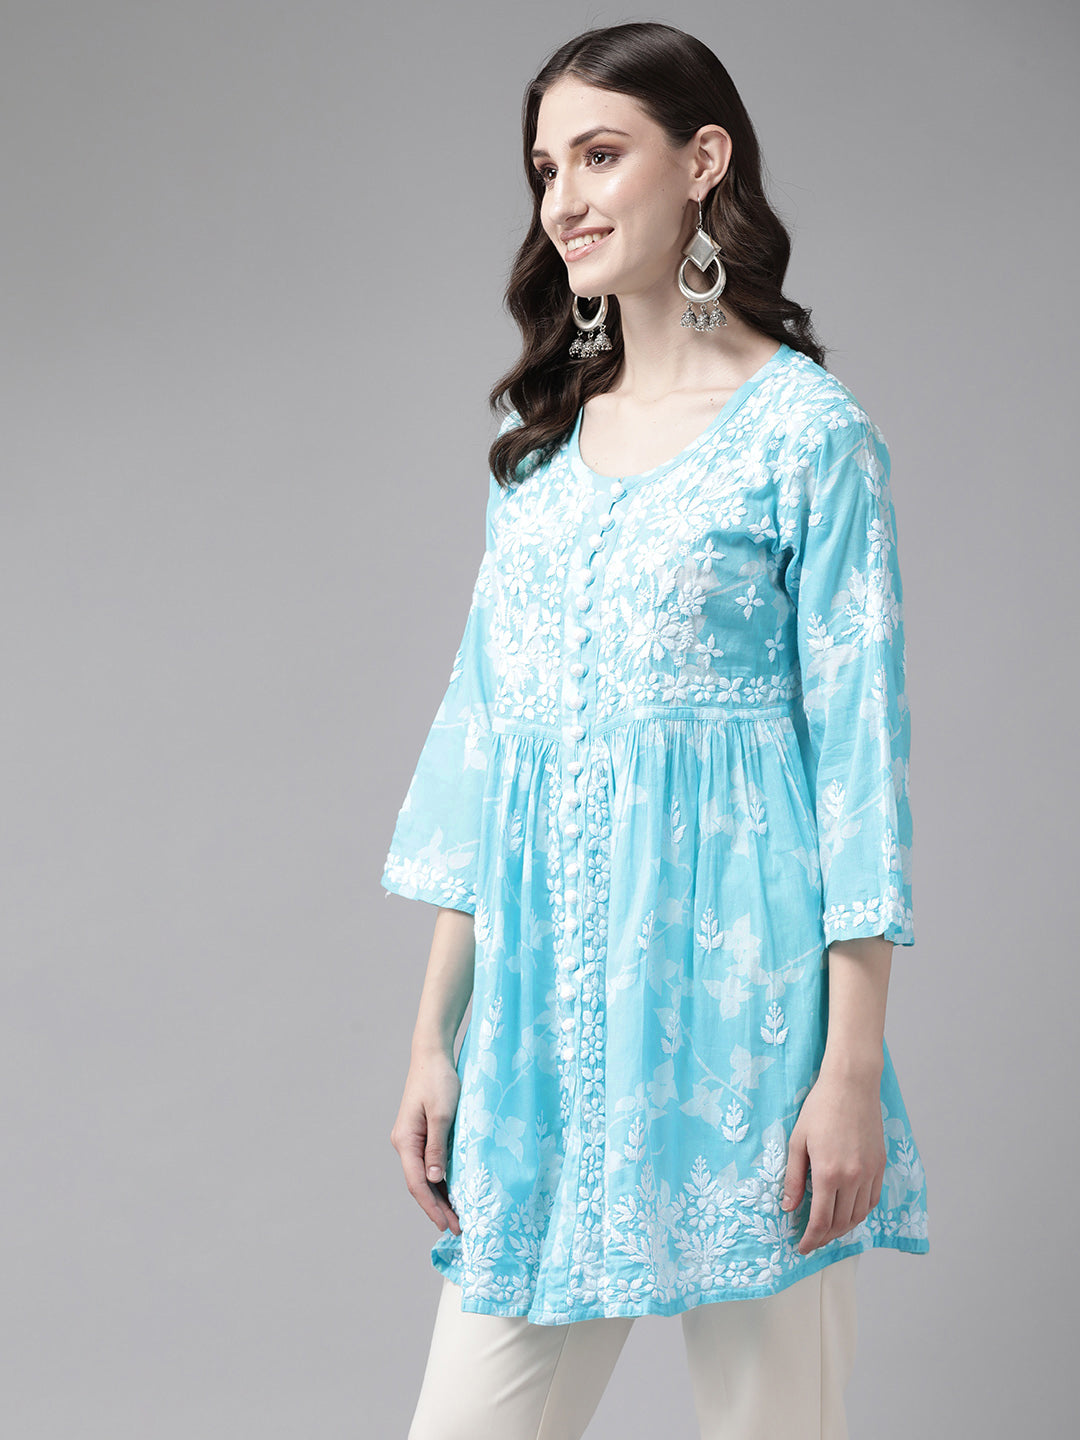 Blue-&-White-Cotton-Floral-Hand-Embroidered-Chikankari-Kurti